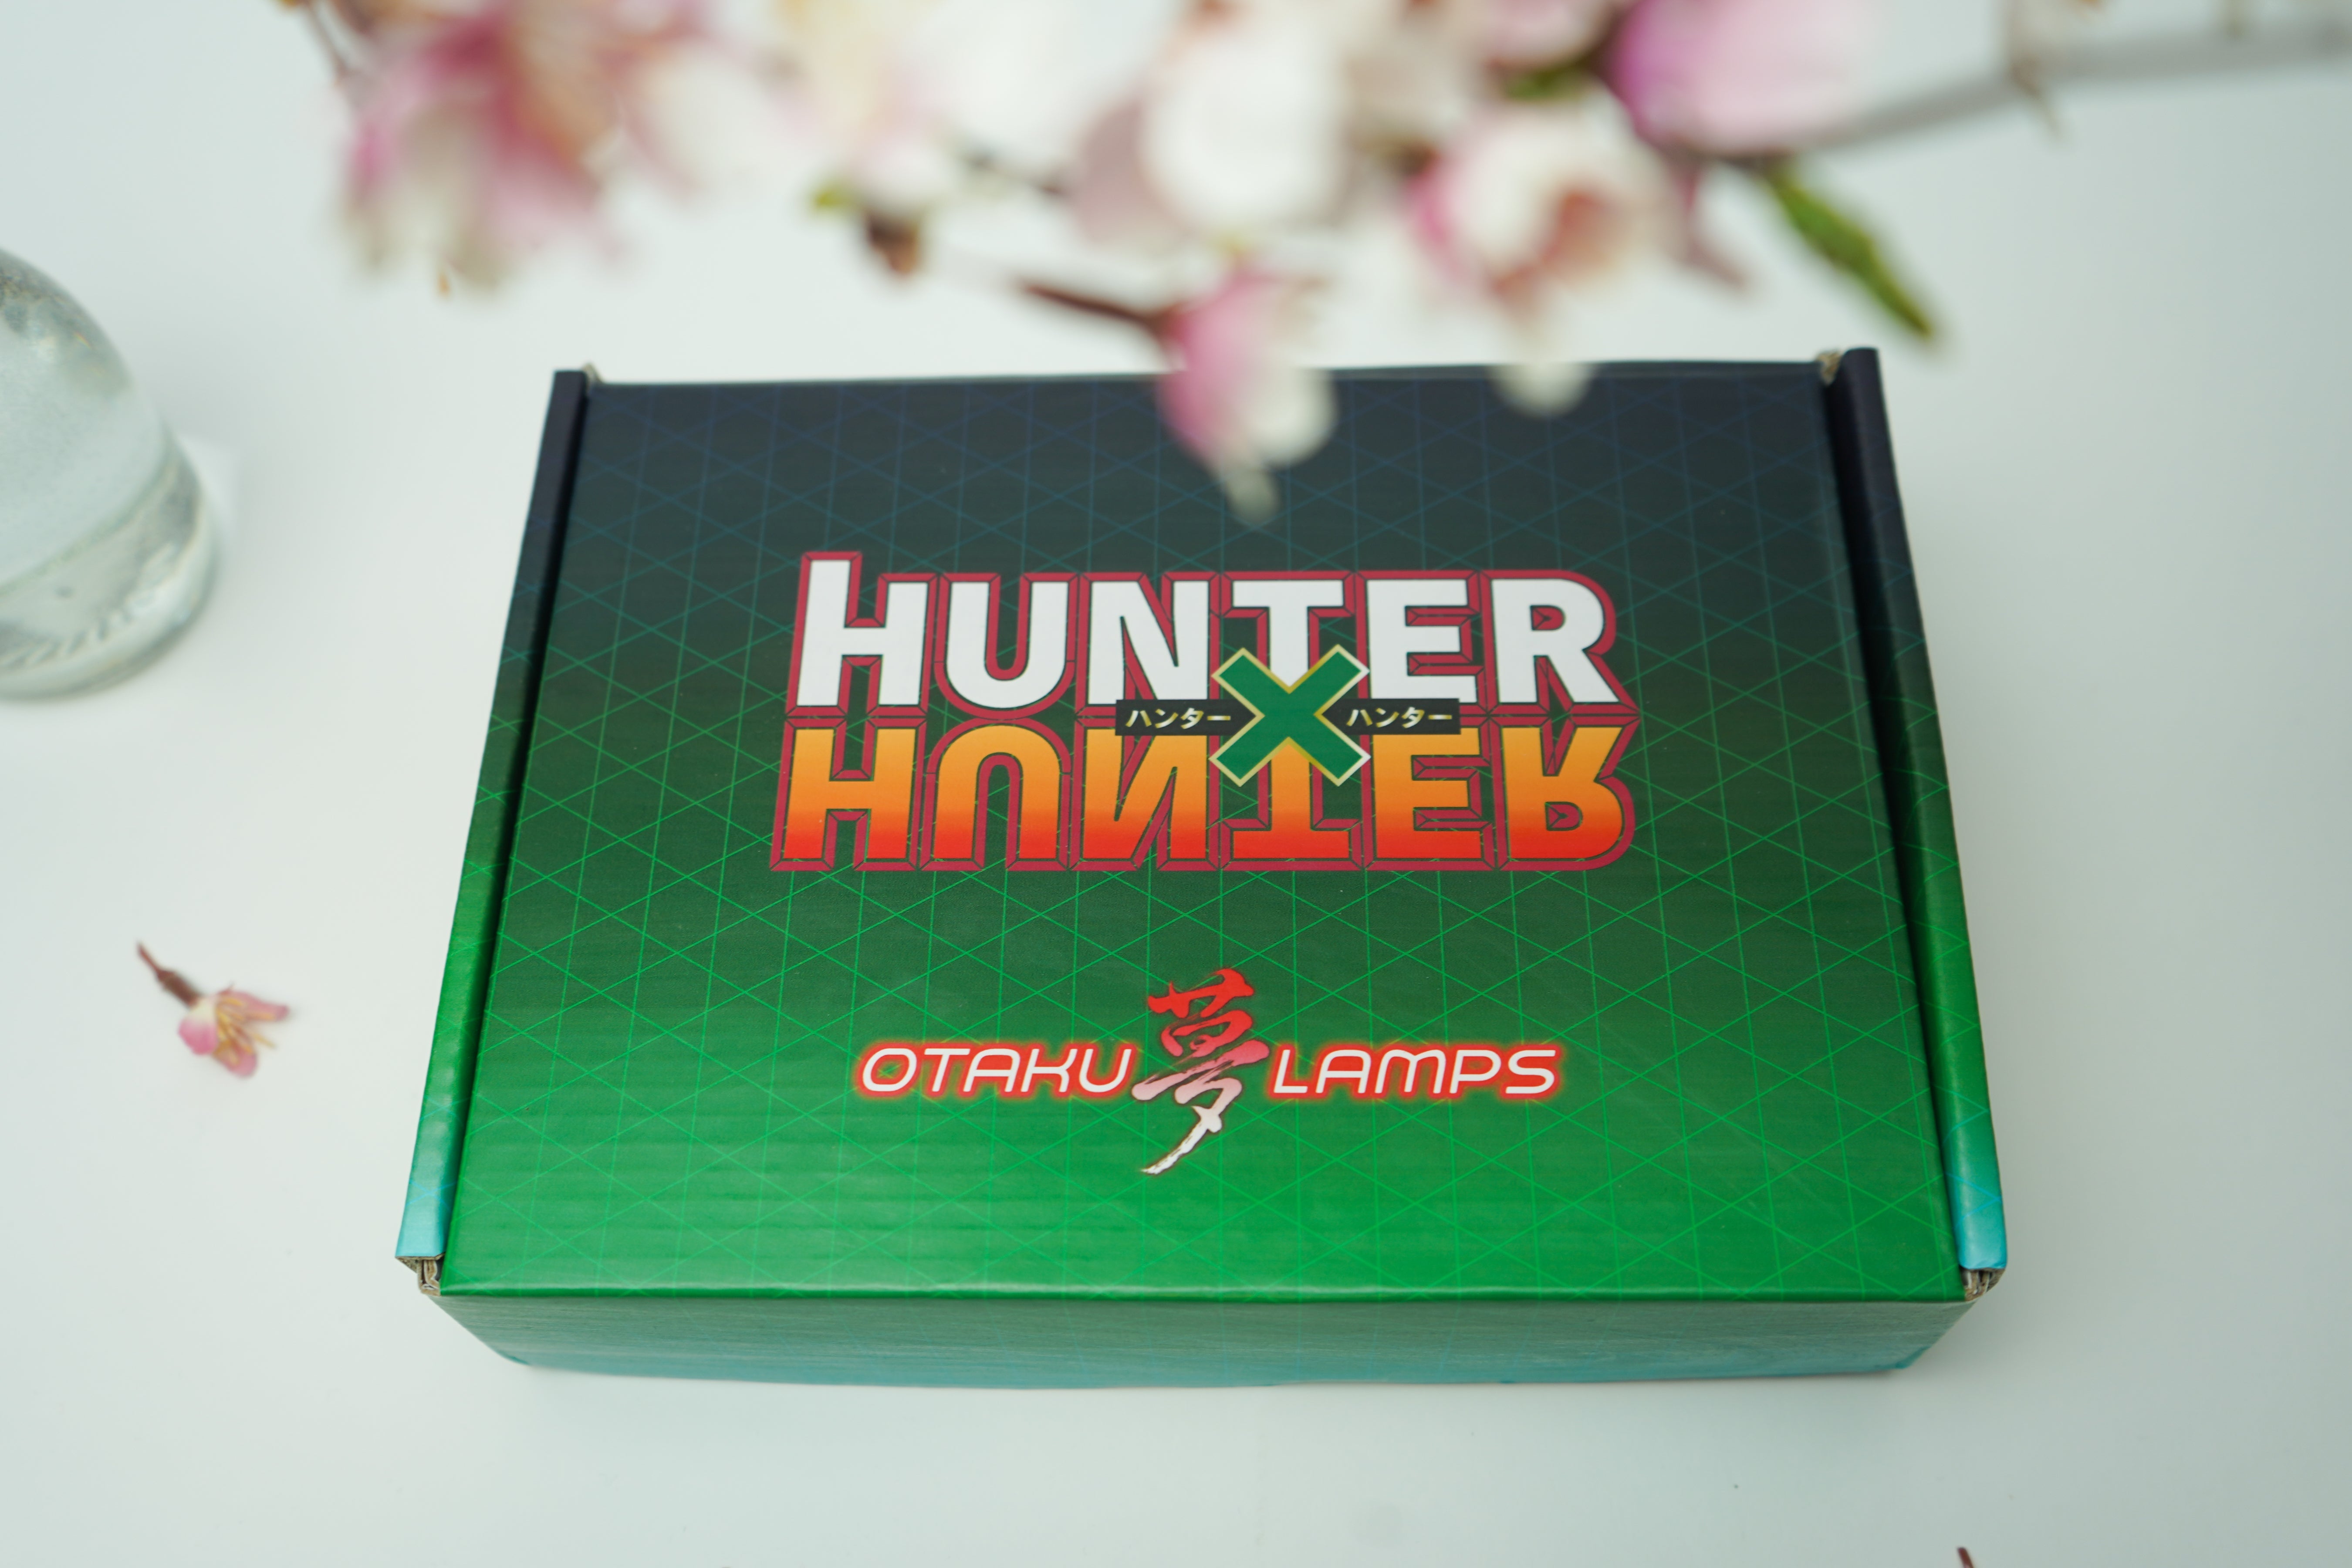 Leorio Otaku Lamp (Hunter X Hunter)